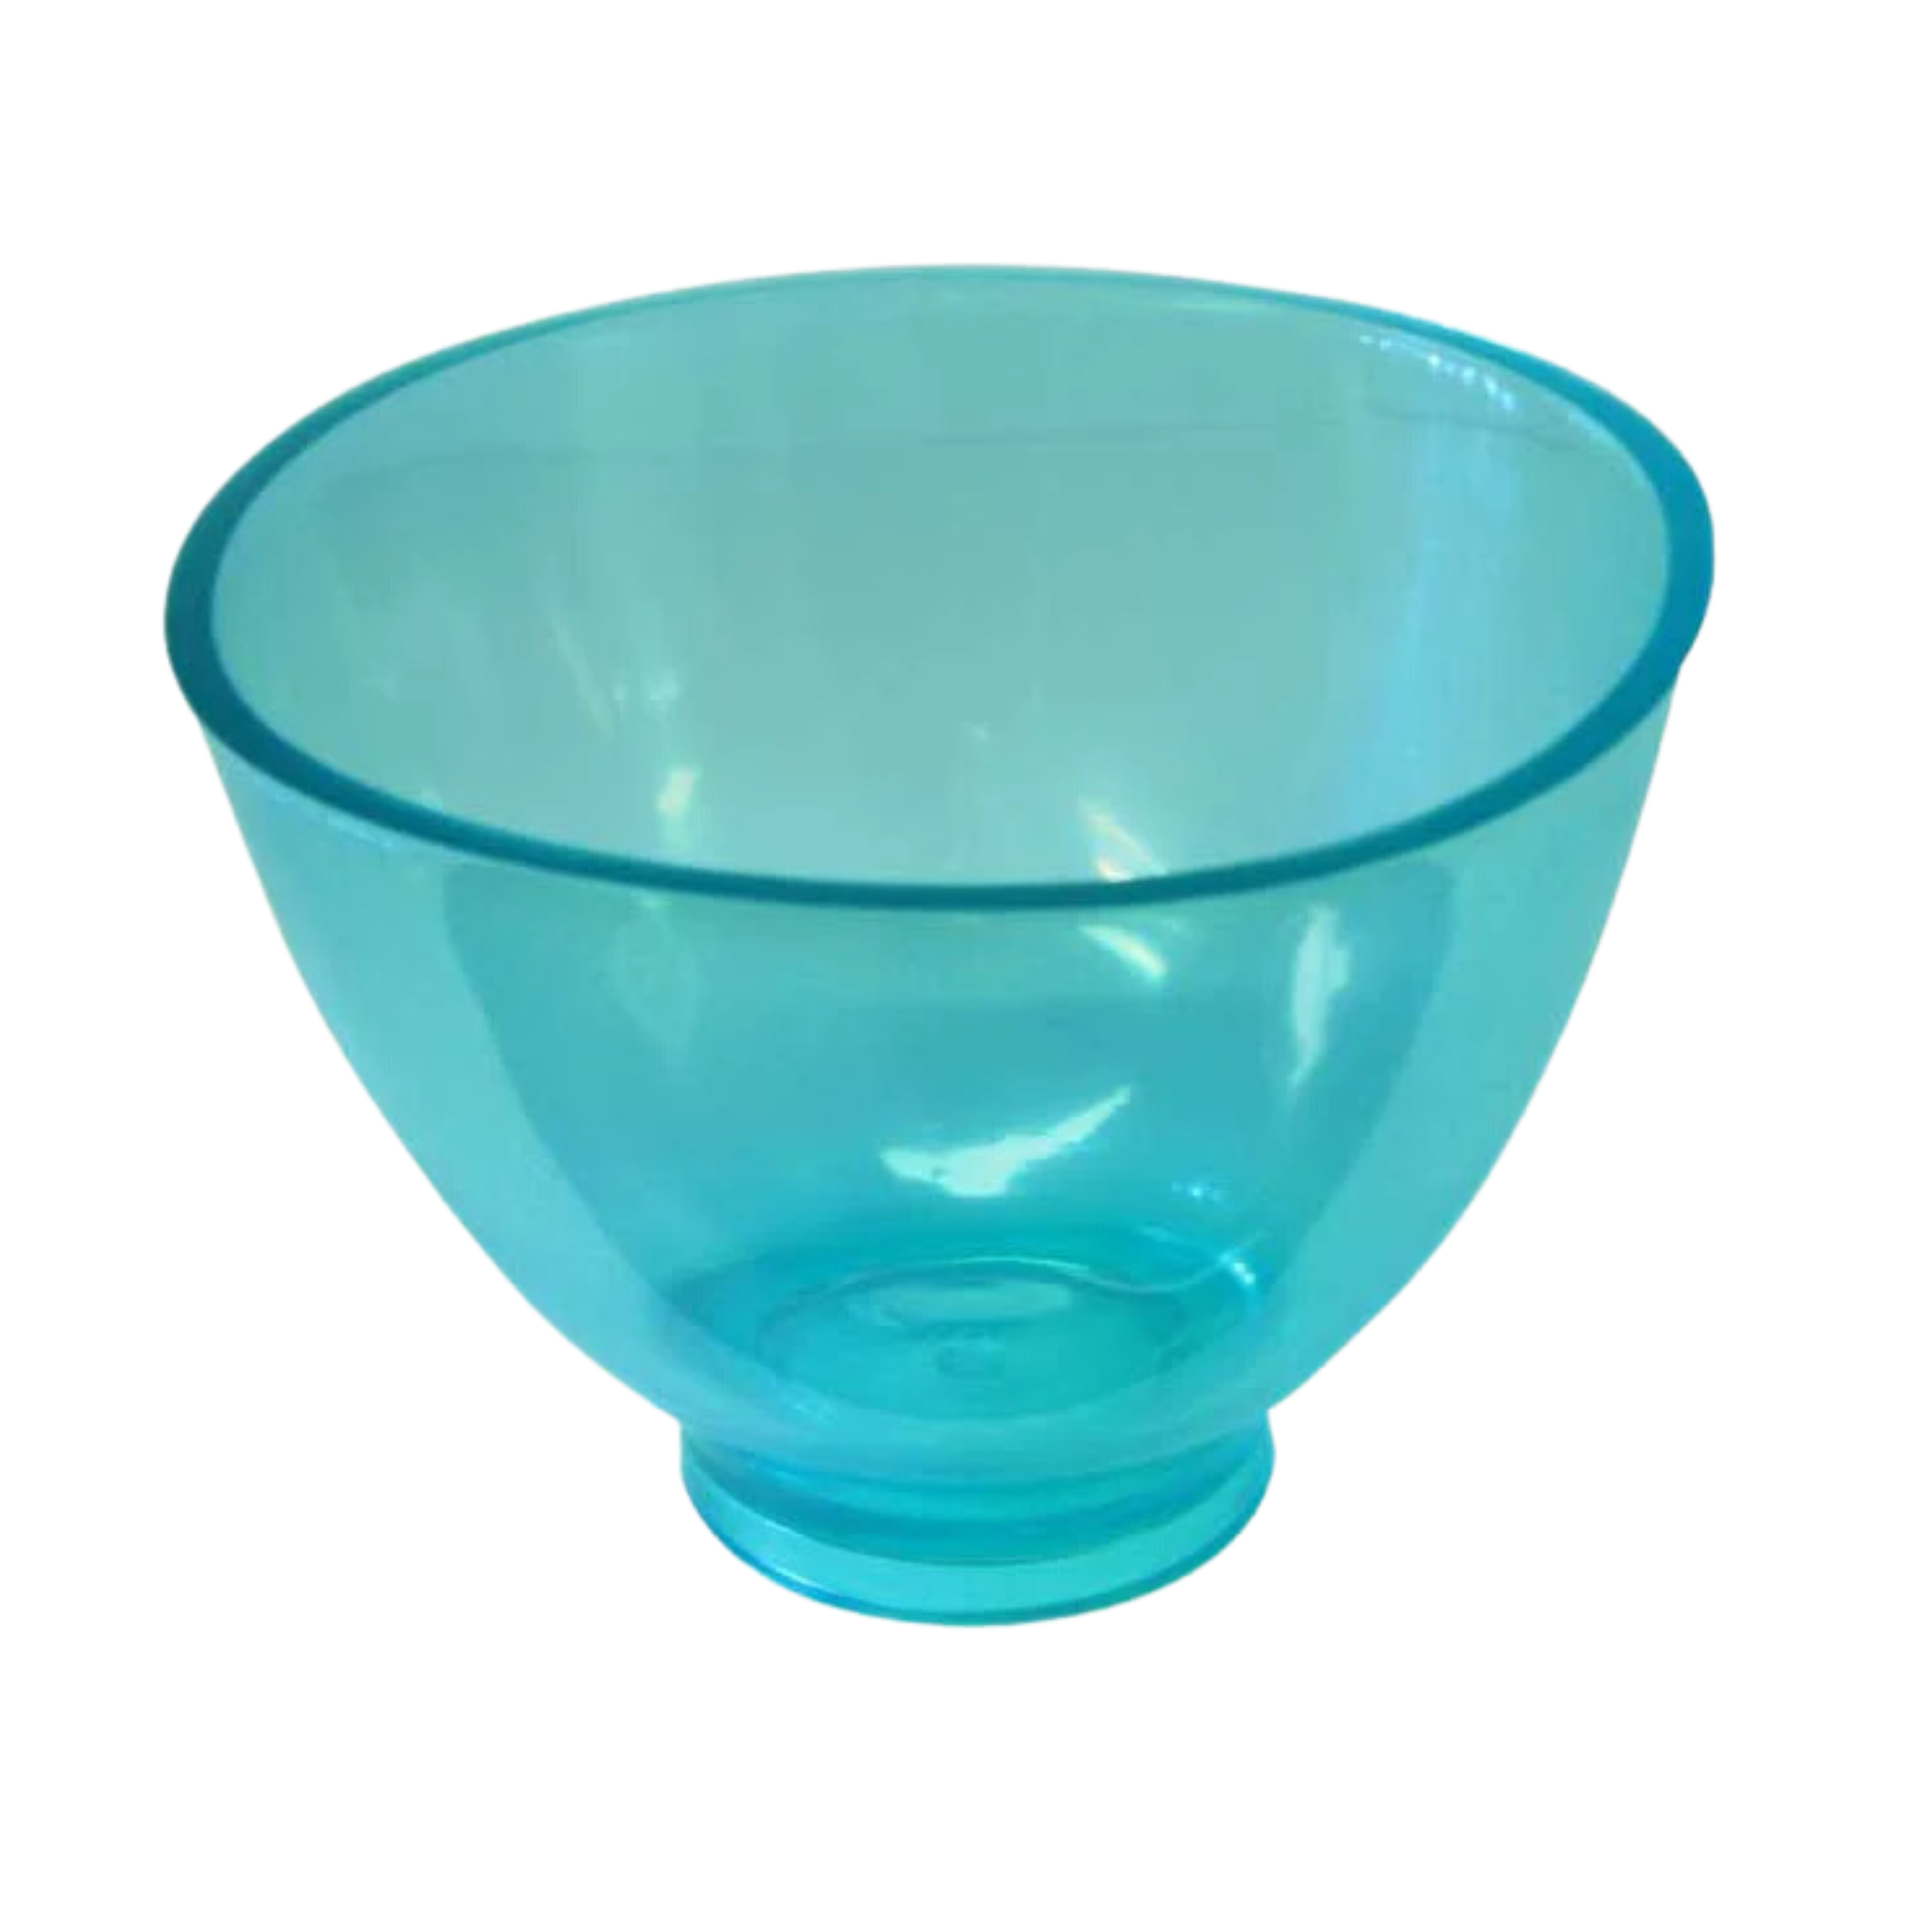 Large Flexible Mixing Bowl, Blue